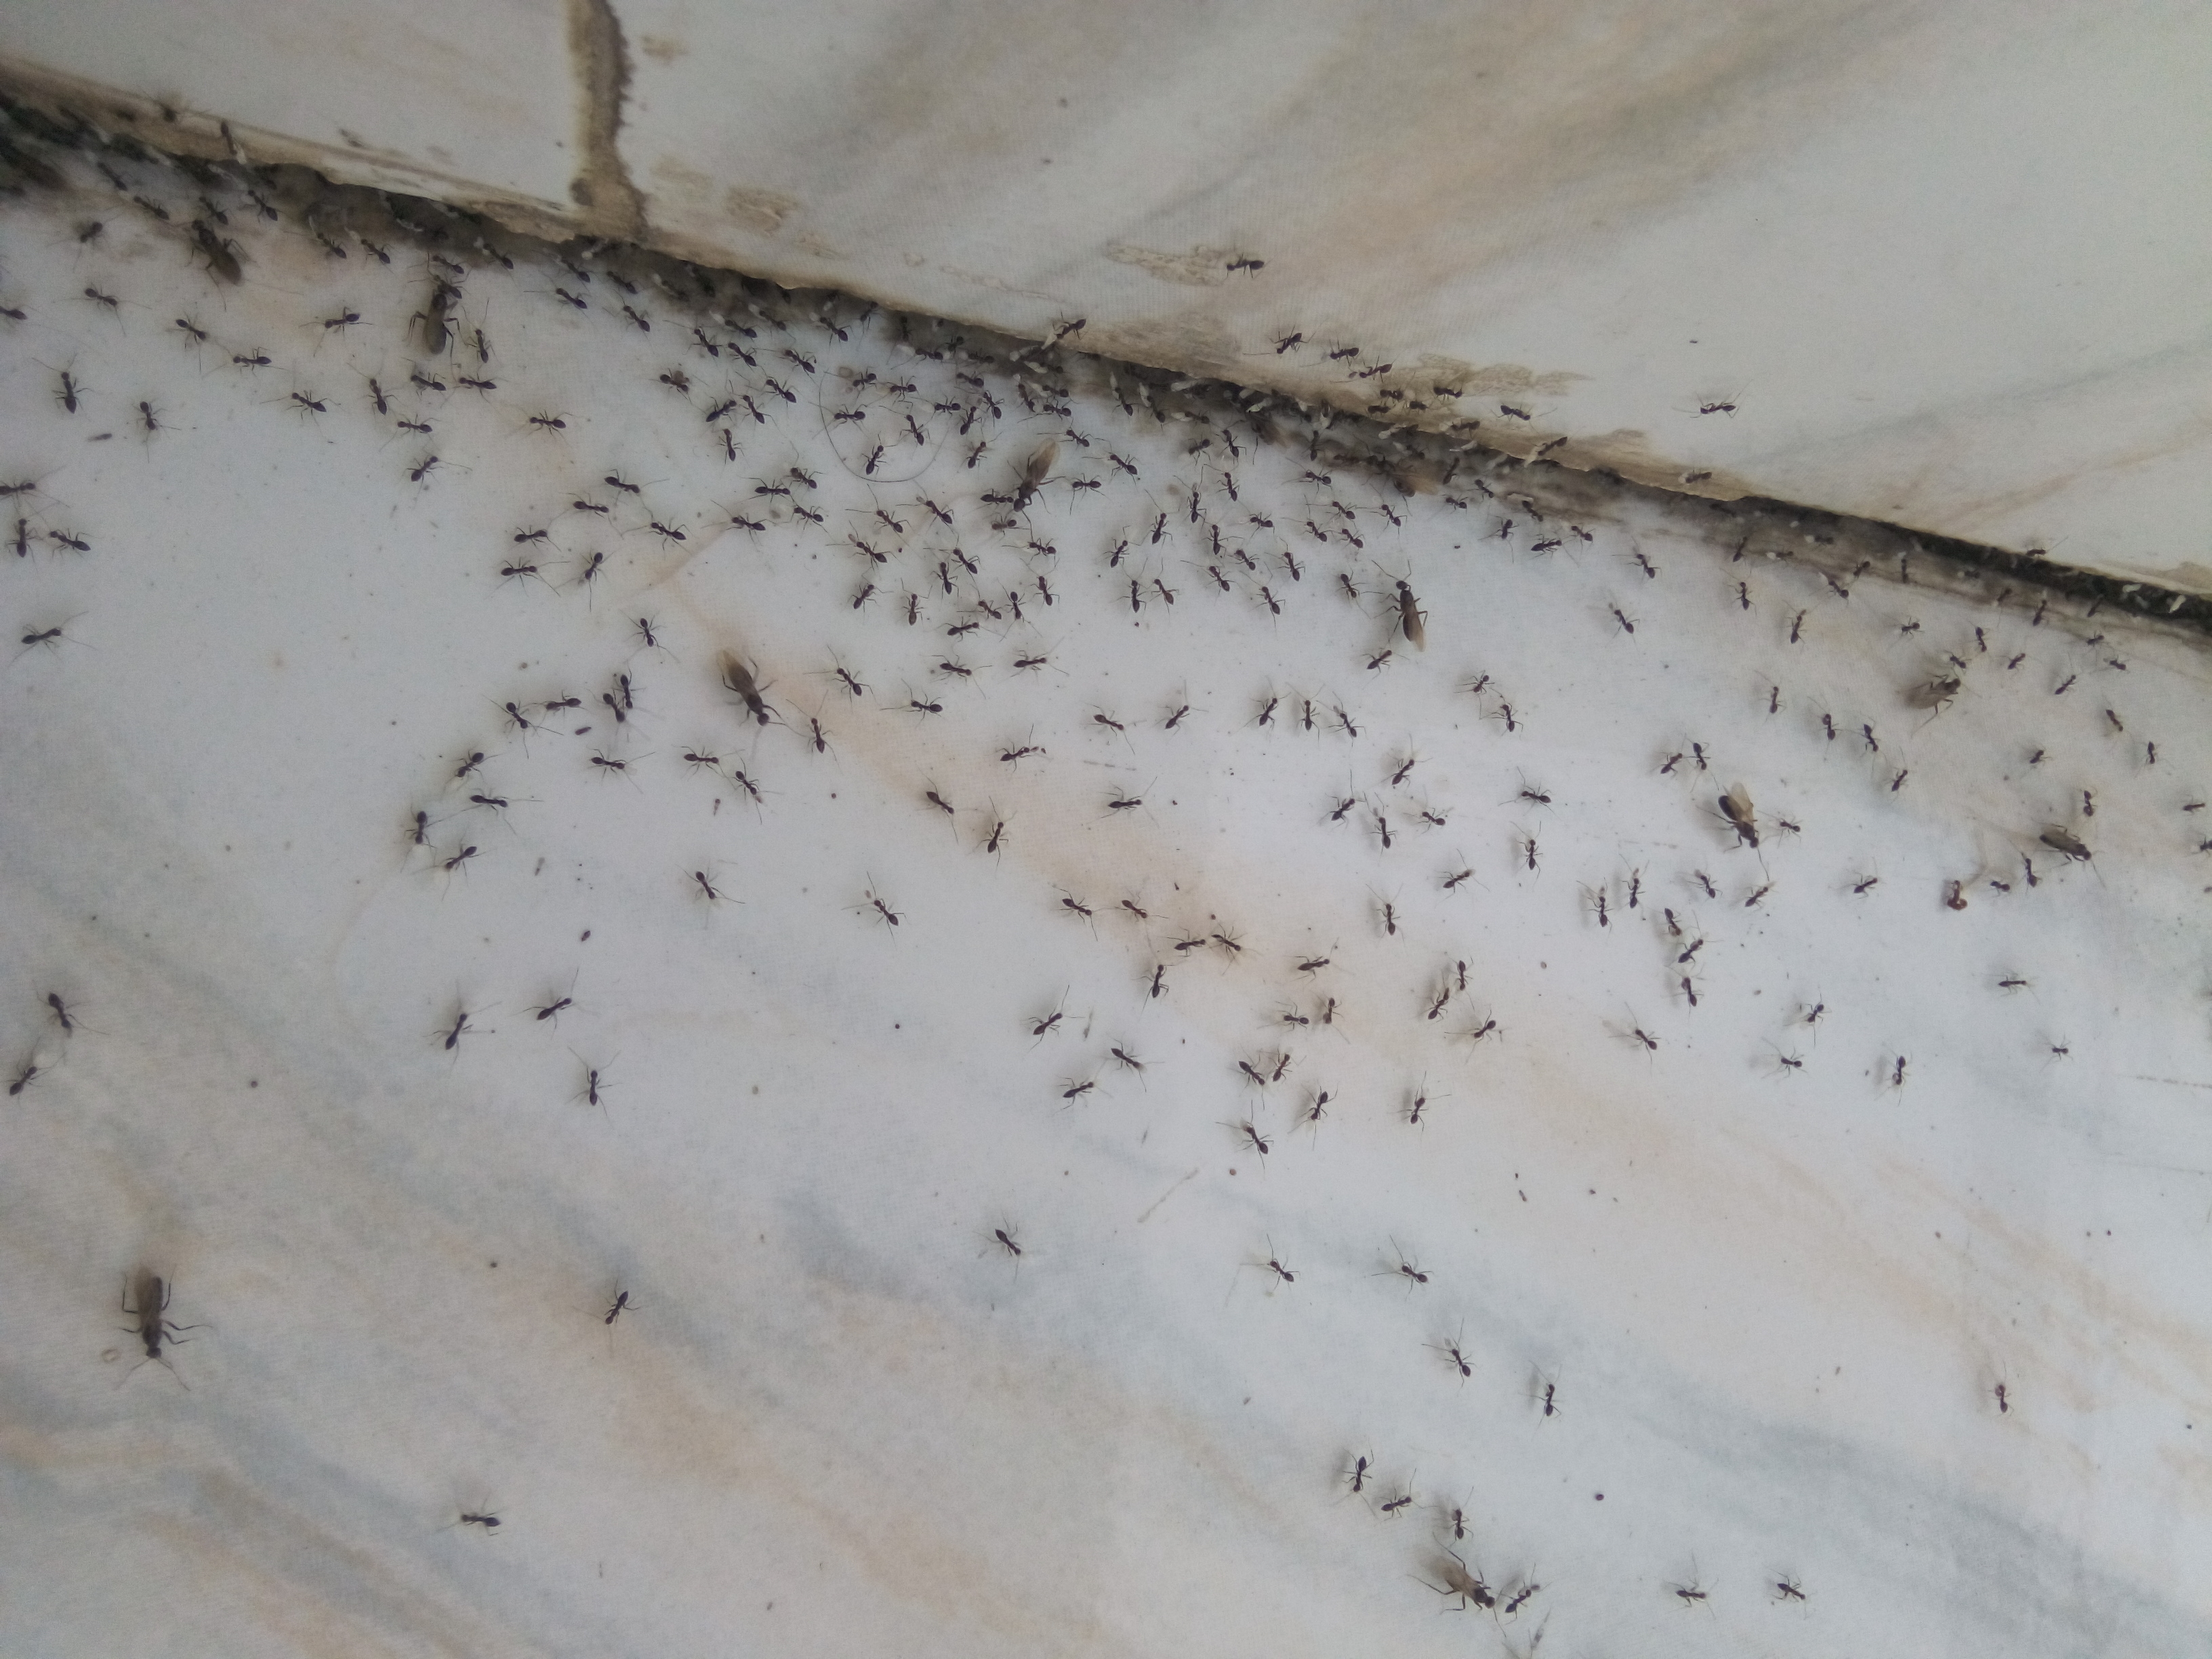 Ant infestation in Loftus